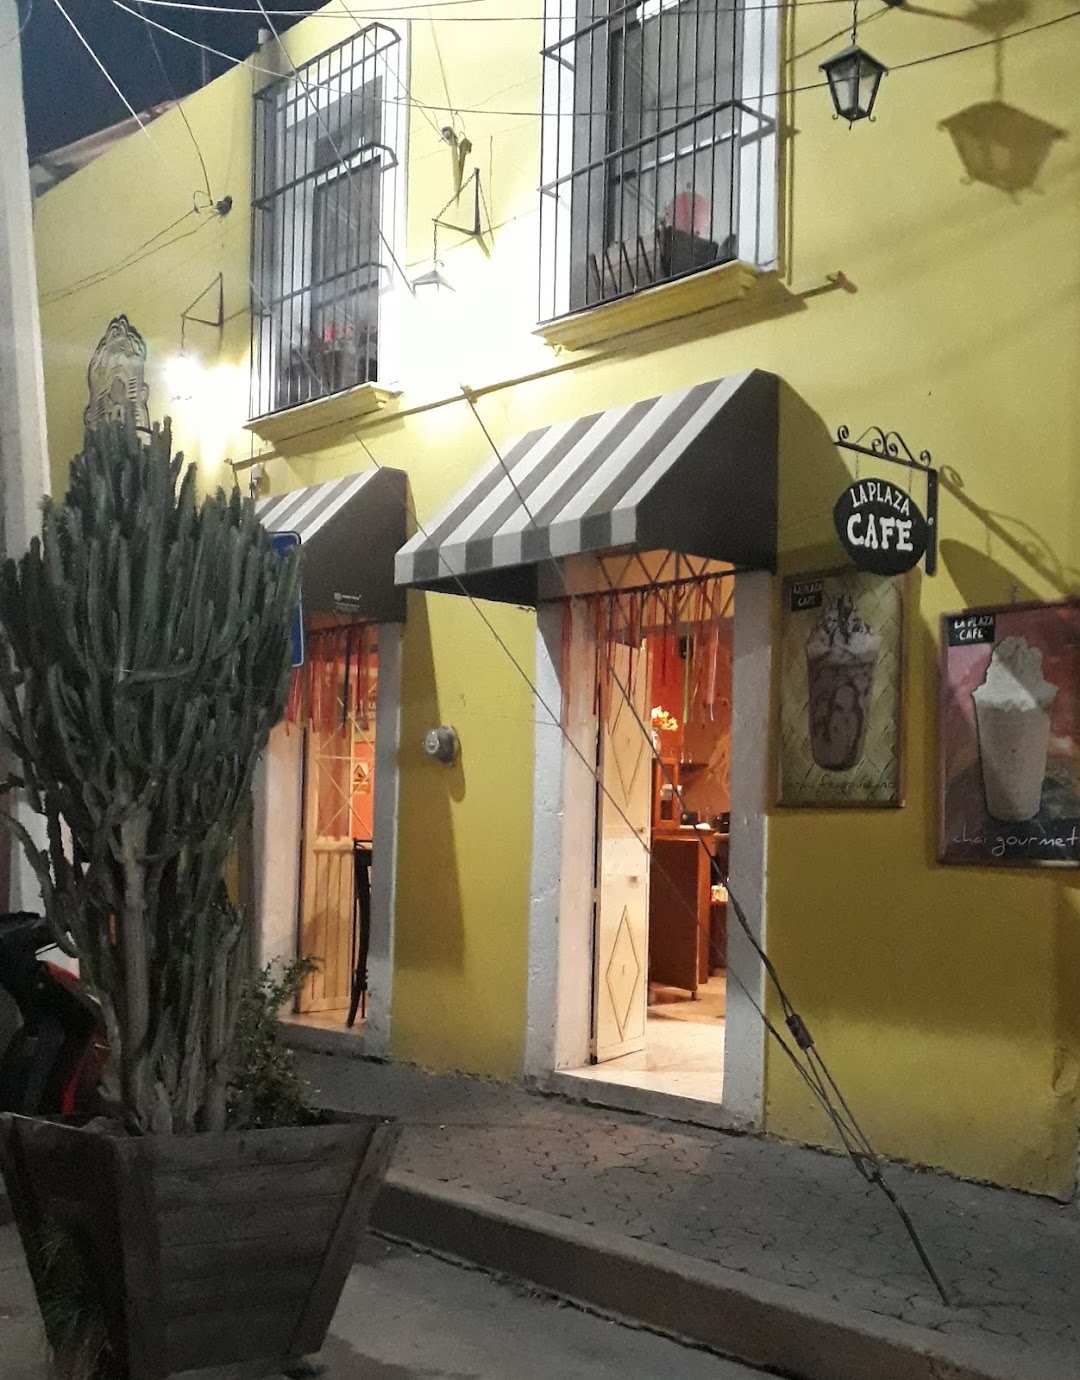 Café La plaza